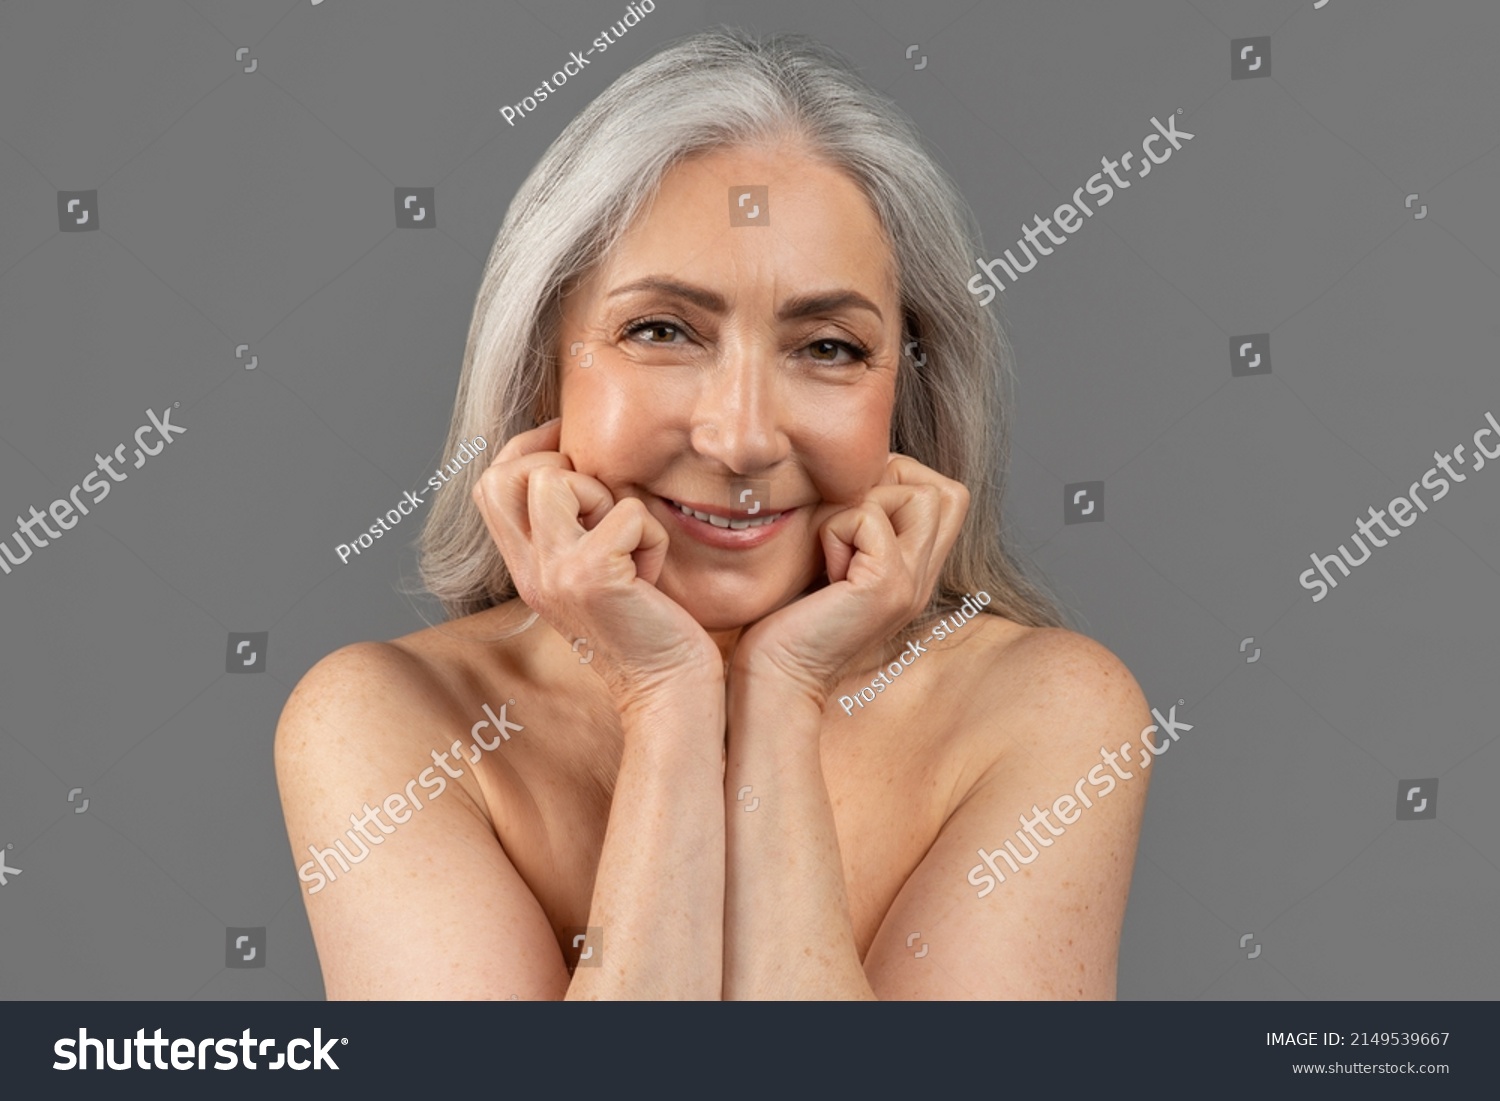 charlotte stanforth add free nude older women photo